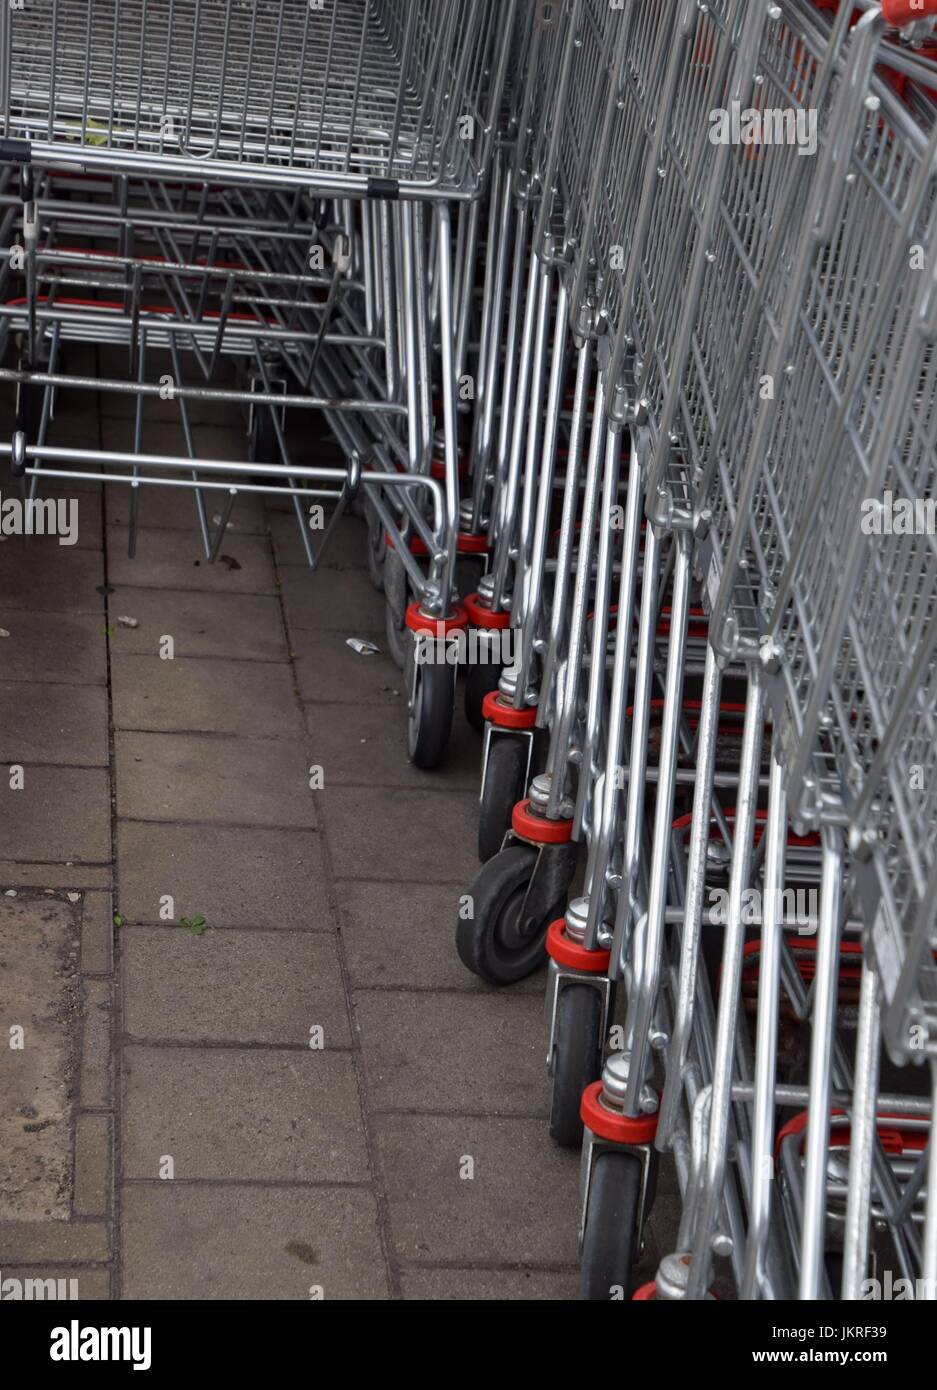 trolley or Shopping carts, telescoping shopping cart Stock Photo